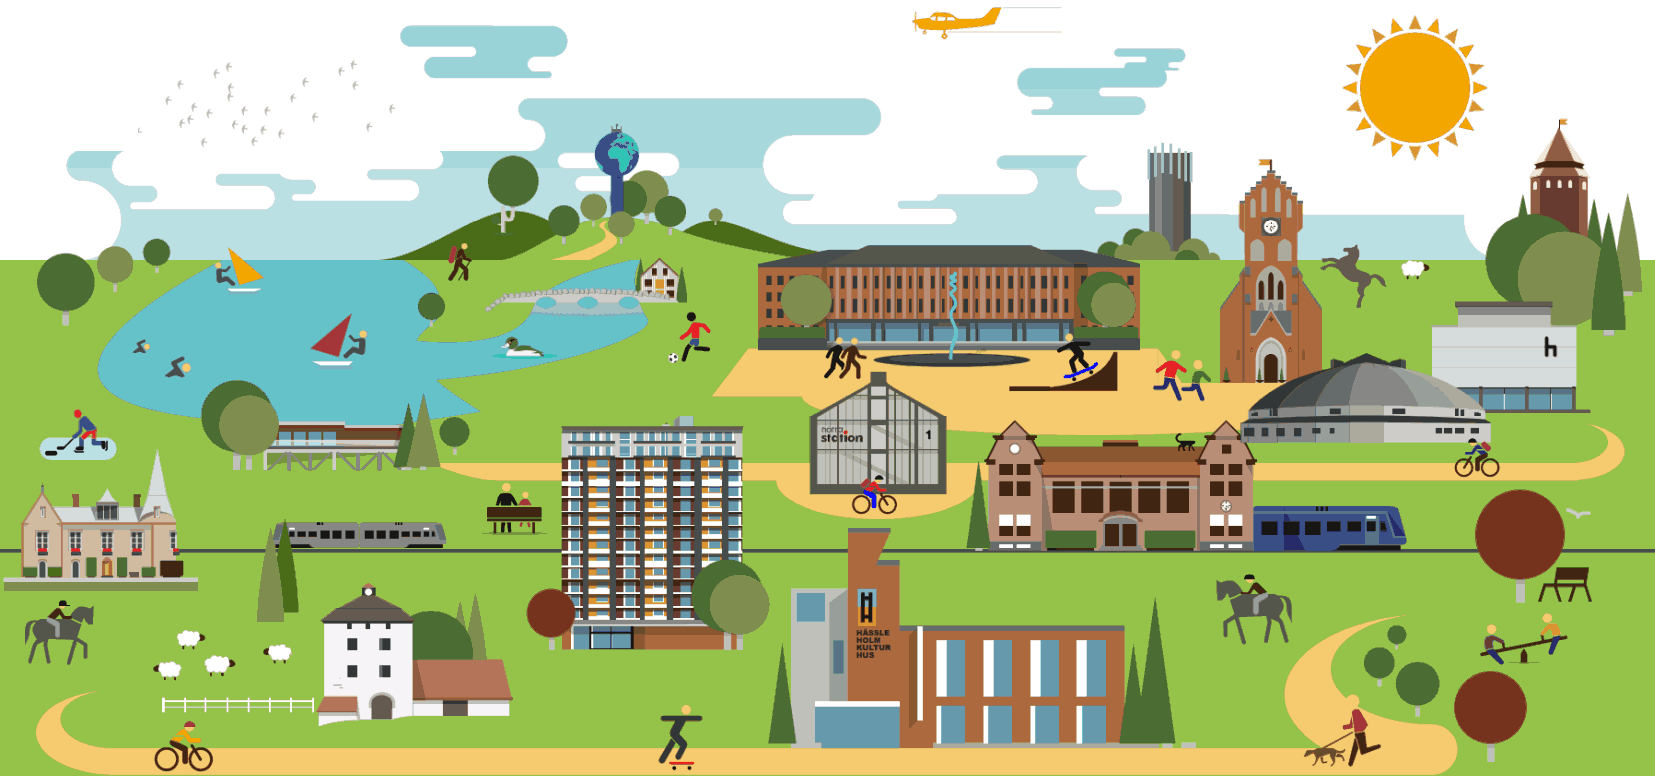 Illustration över Hässleholms kommun